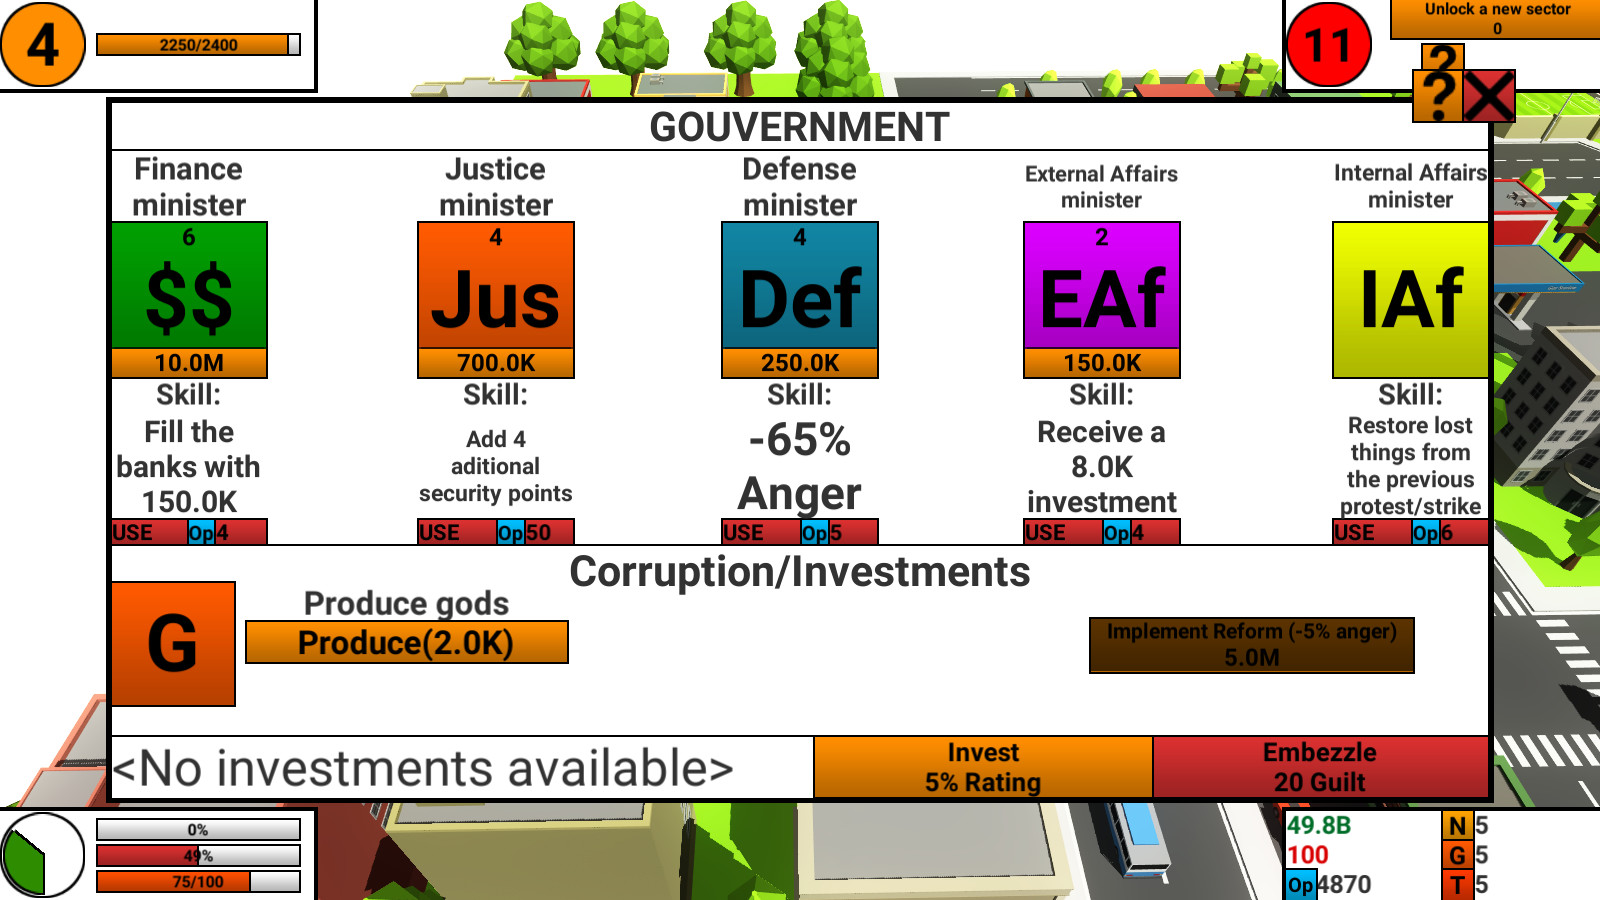 Corrupt Political Simulator Steam CD Key